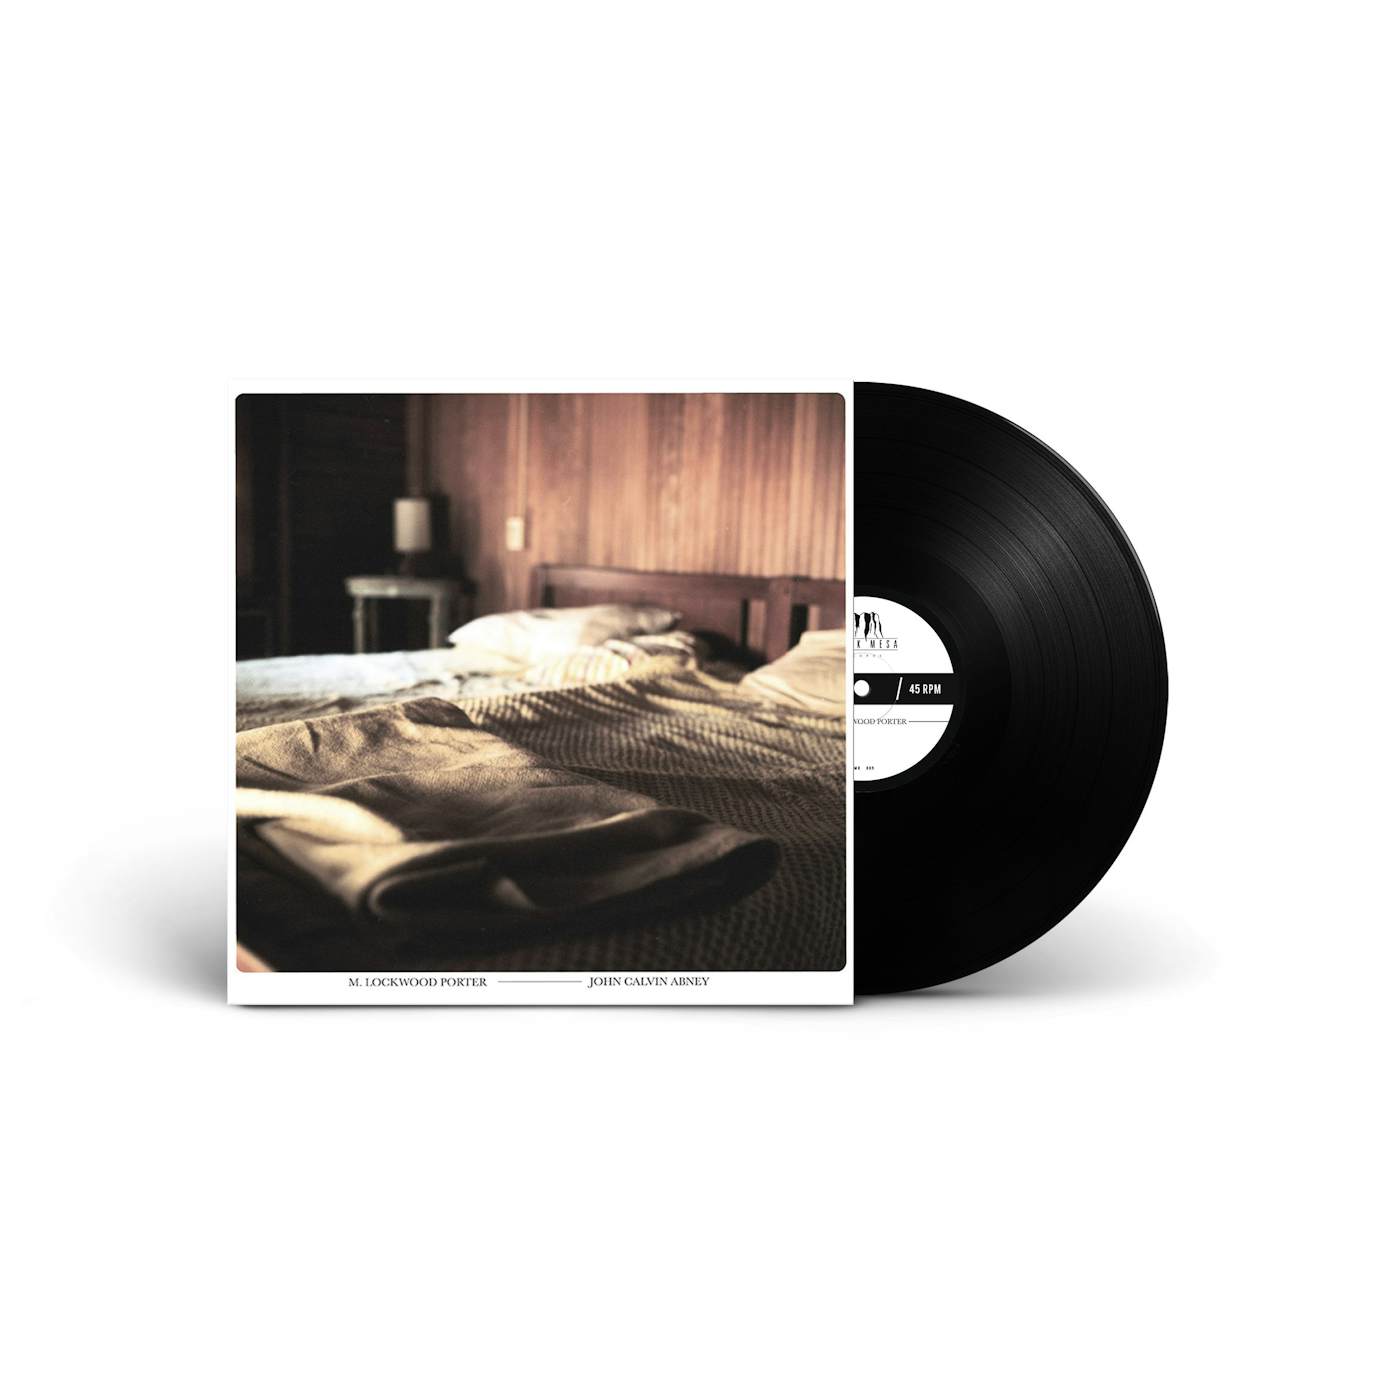 Black Mesa Records  John Calvin Abney / M. Lockwood Porter Split 10"